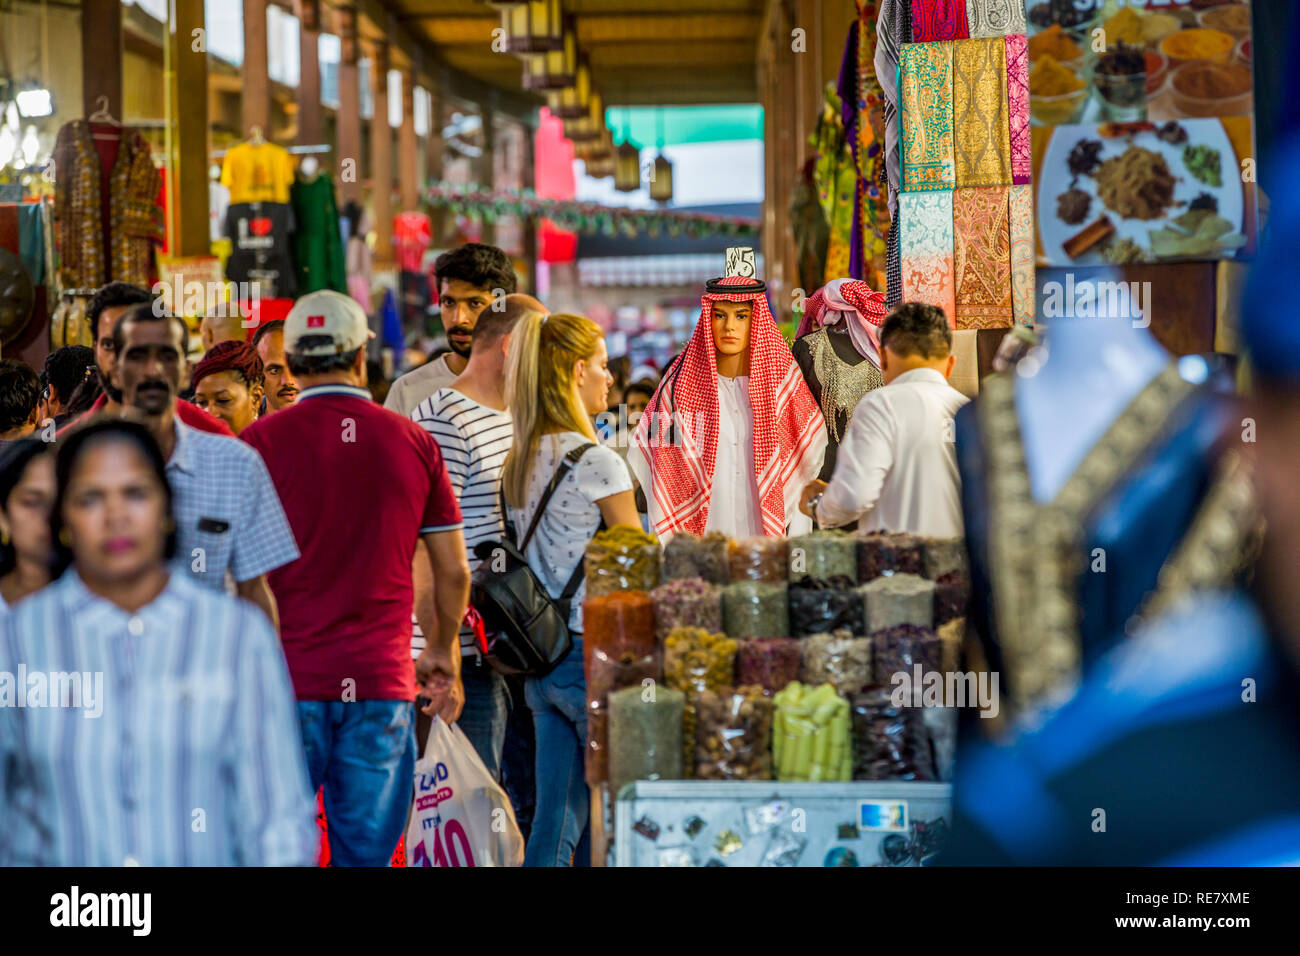 Arabian market in dubai Stock Photo